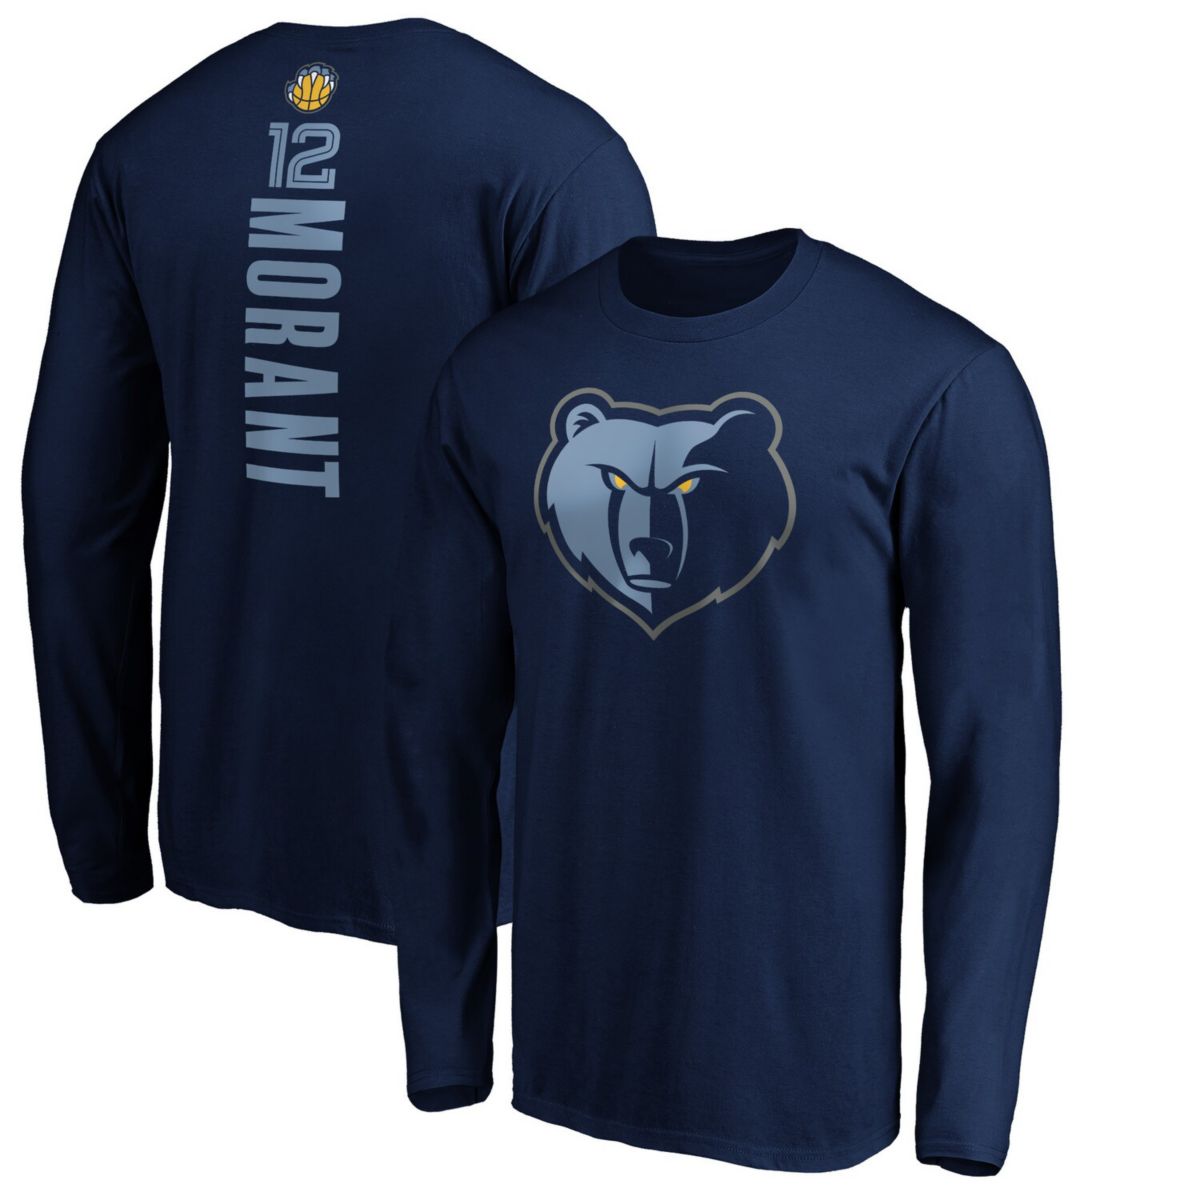 Men's Fanatics Branded Ja Morant Navy Memphis Grizzlies Team Playmaker Name & Number Long Sleeve T-Shirt Fanatics